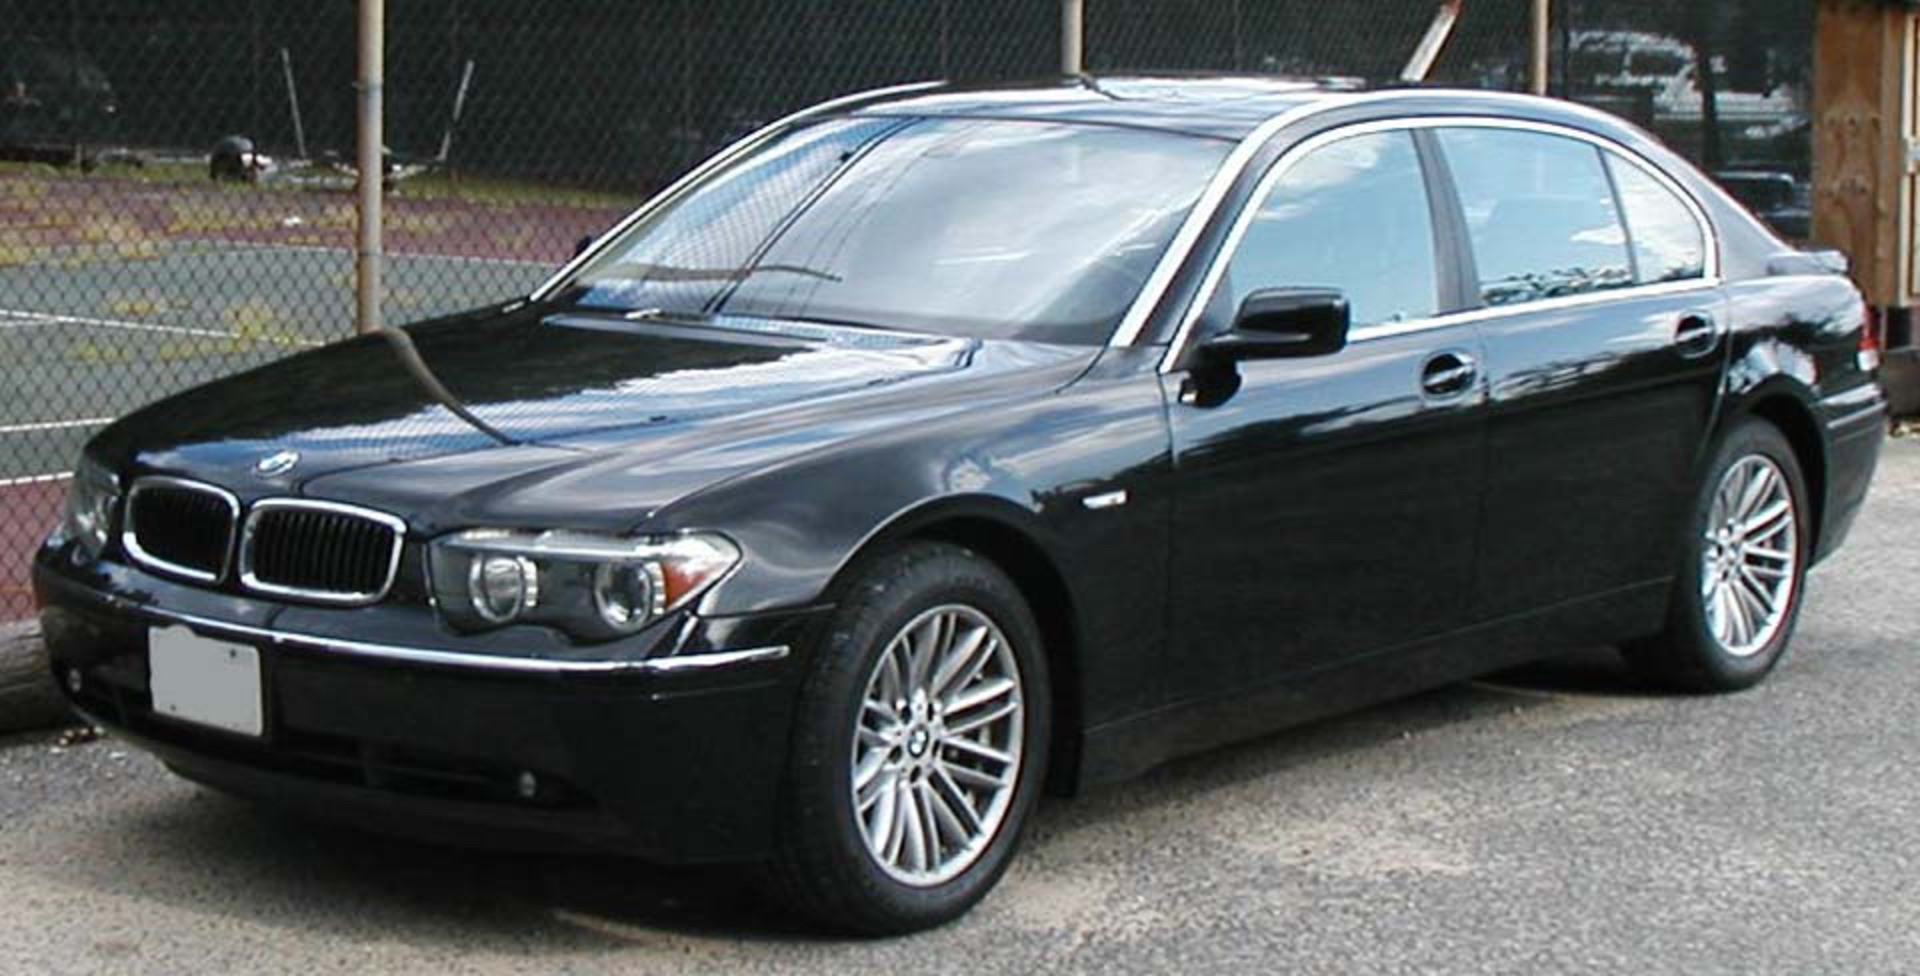 File:BMW-745.jpg - Wikimedia Commons